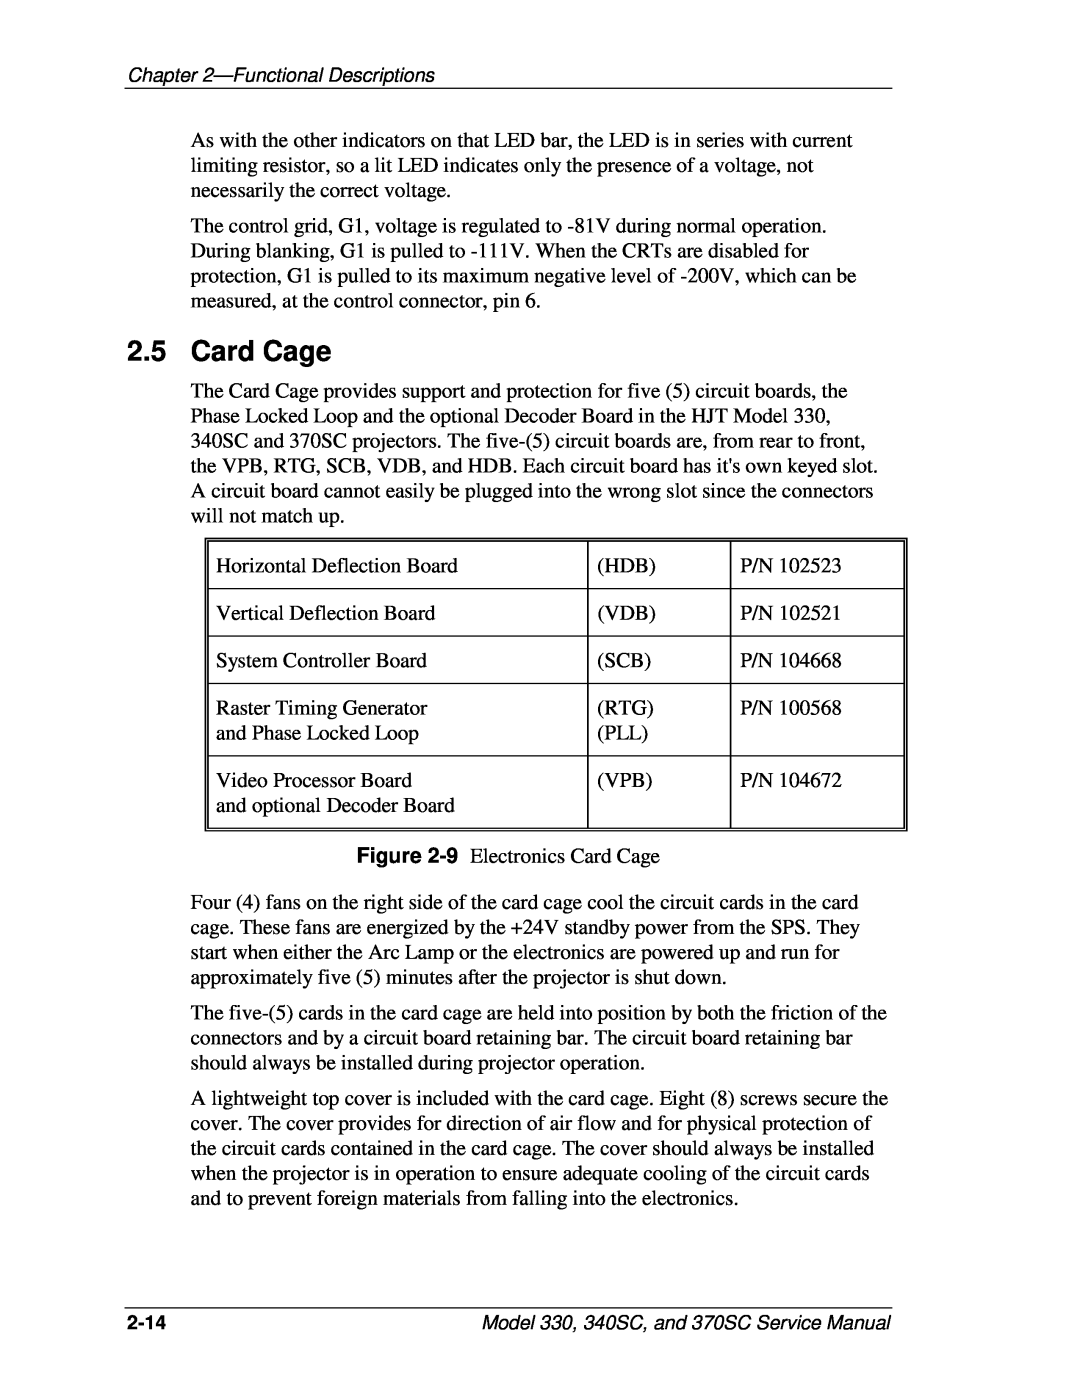 JVC 340 SC, 330, 370 SC service manual Card Cage 